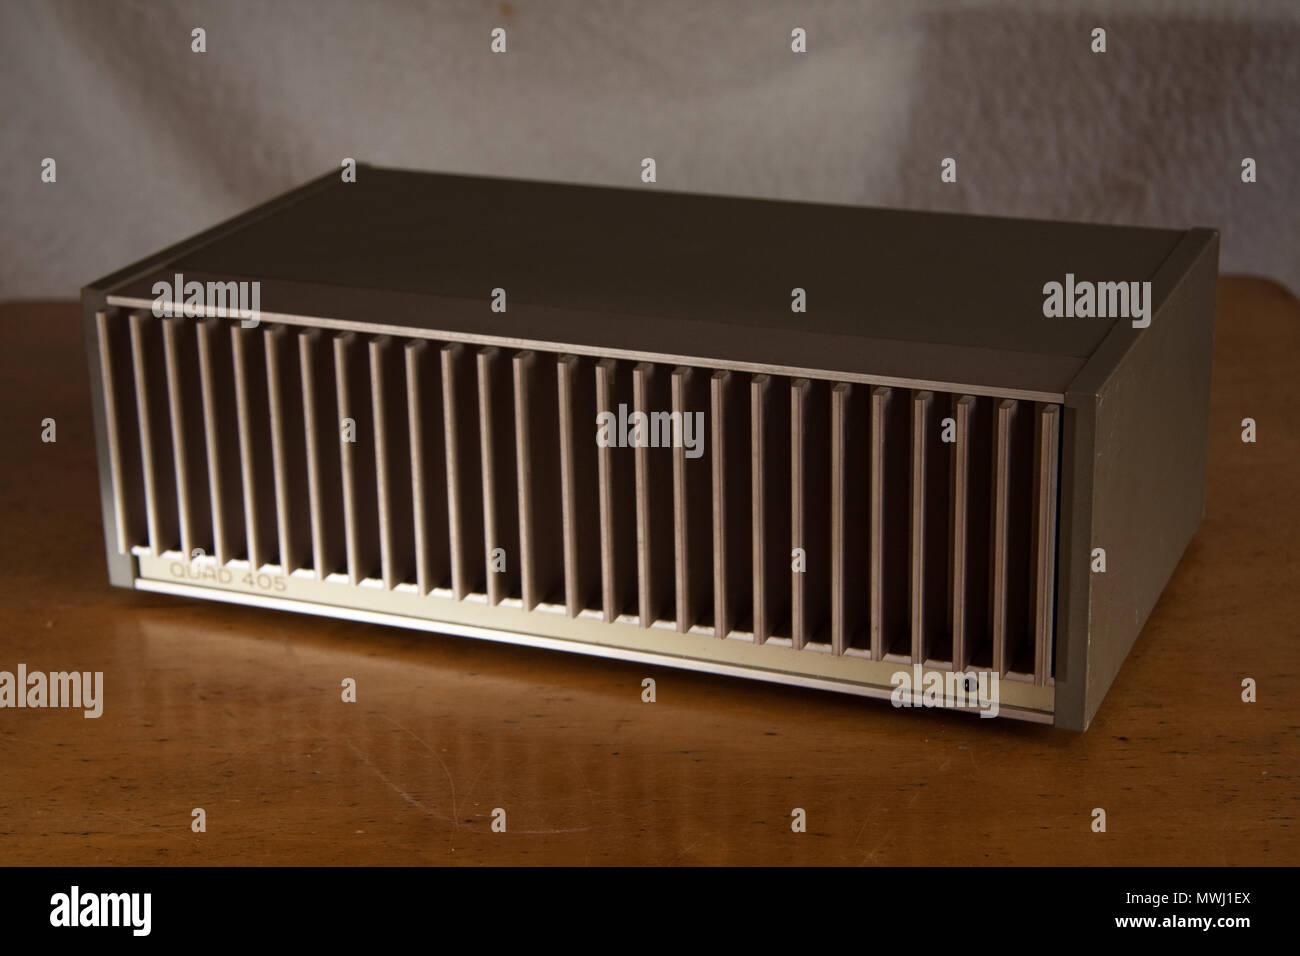 Classic Quad 405 Stereo Endstufe Stockfotografie - Alamy